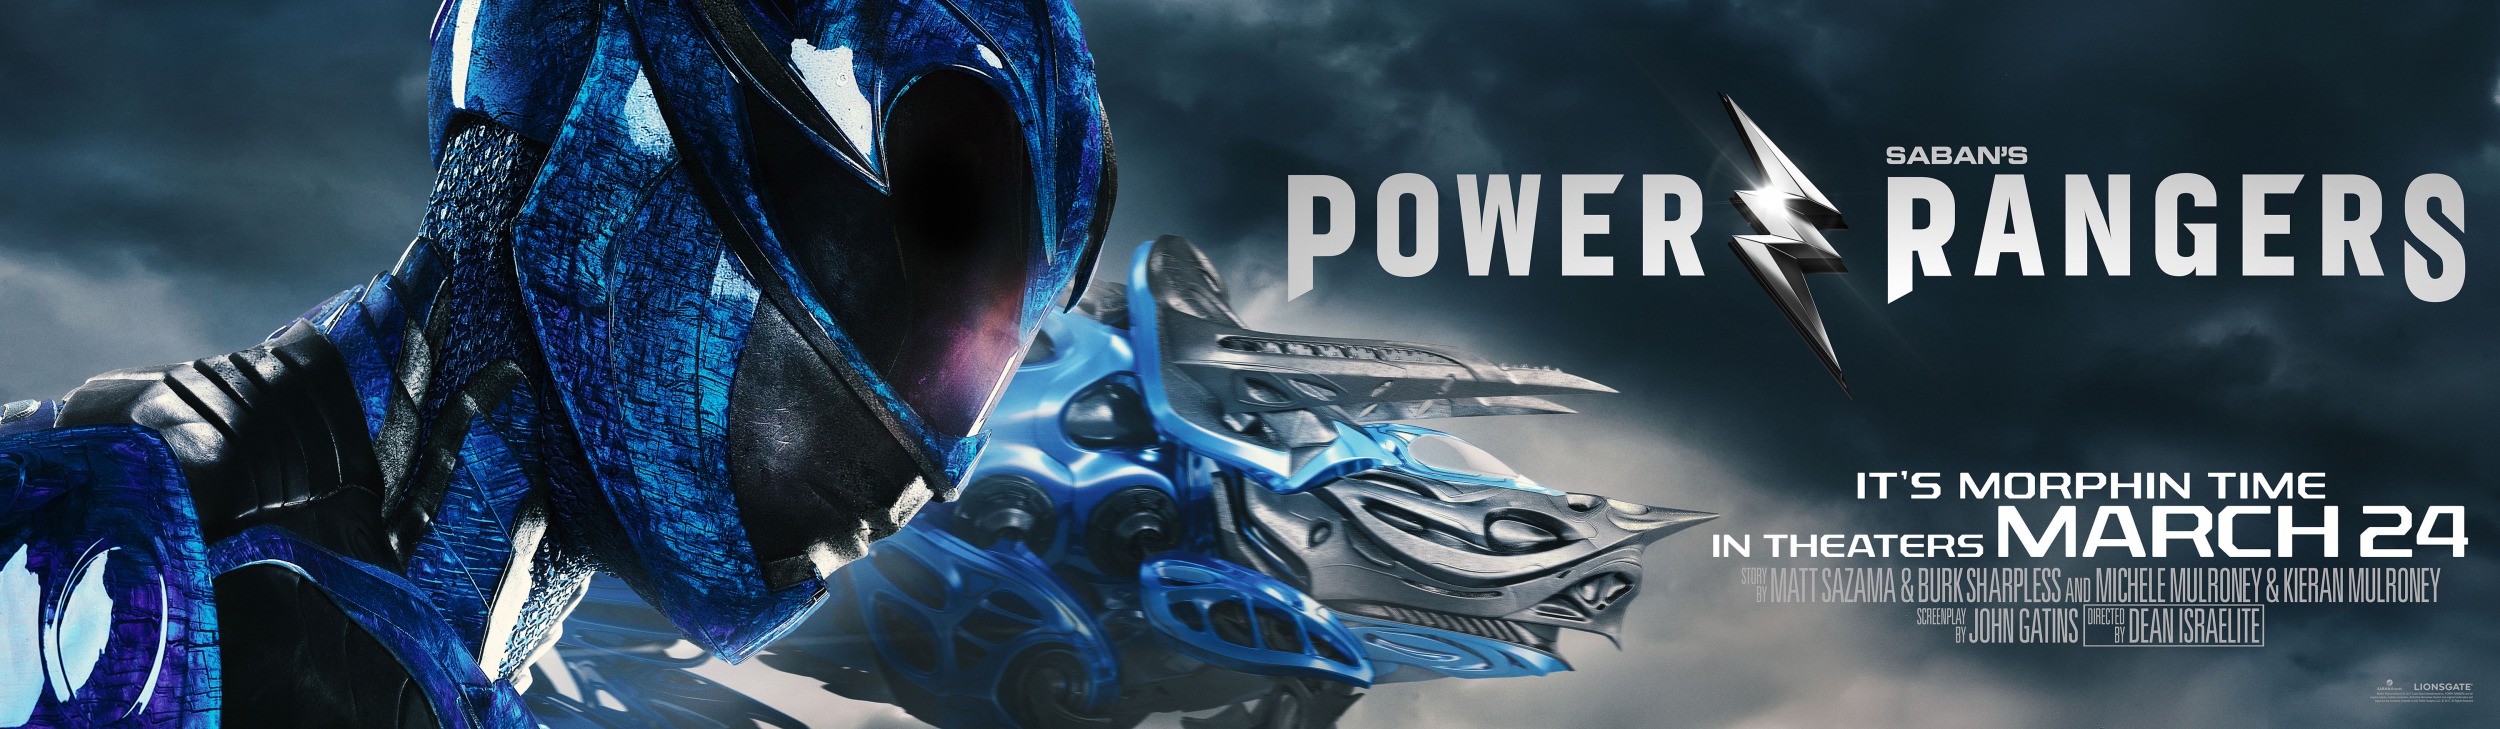 Mega Sized Movie Poster Image for Power Rangers (#32 of 50)